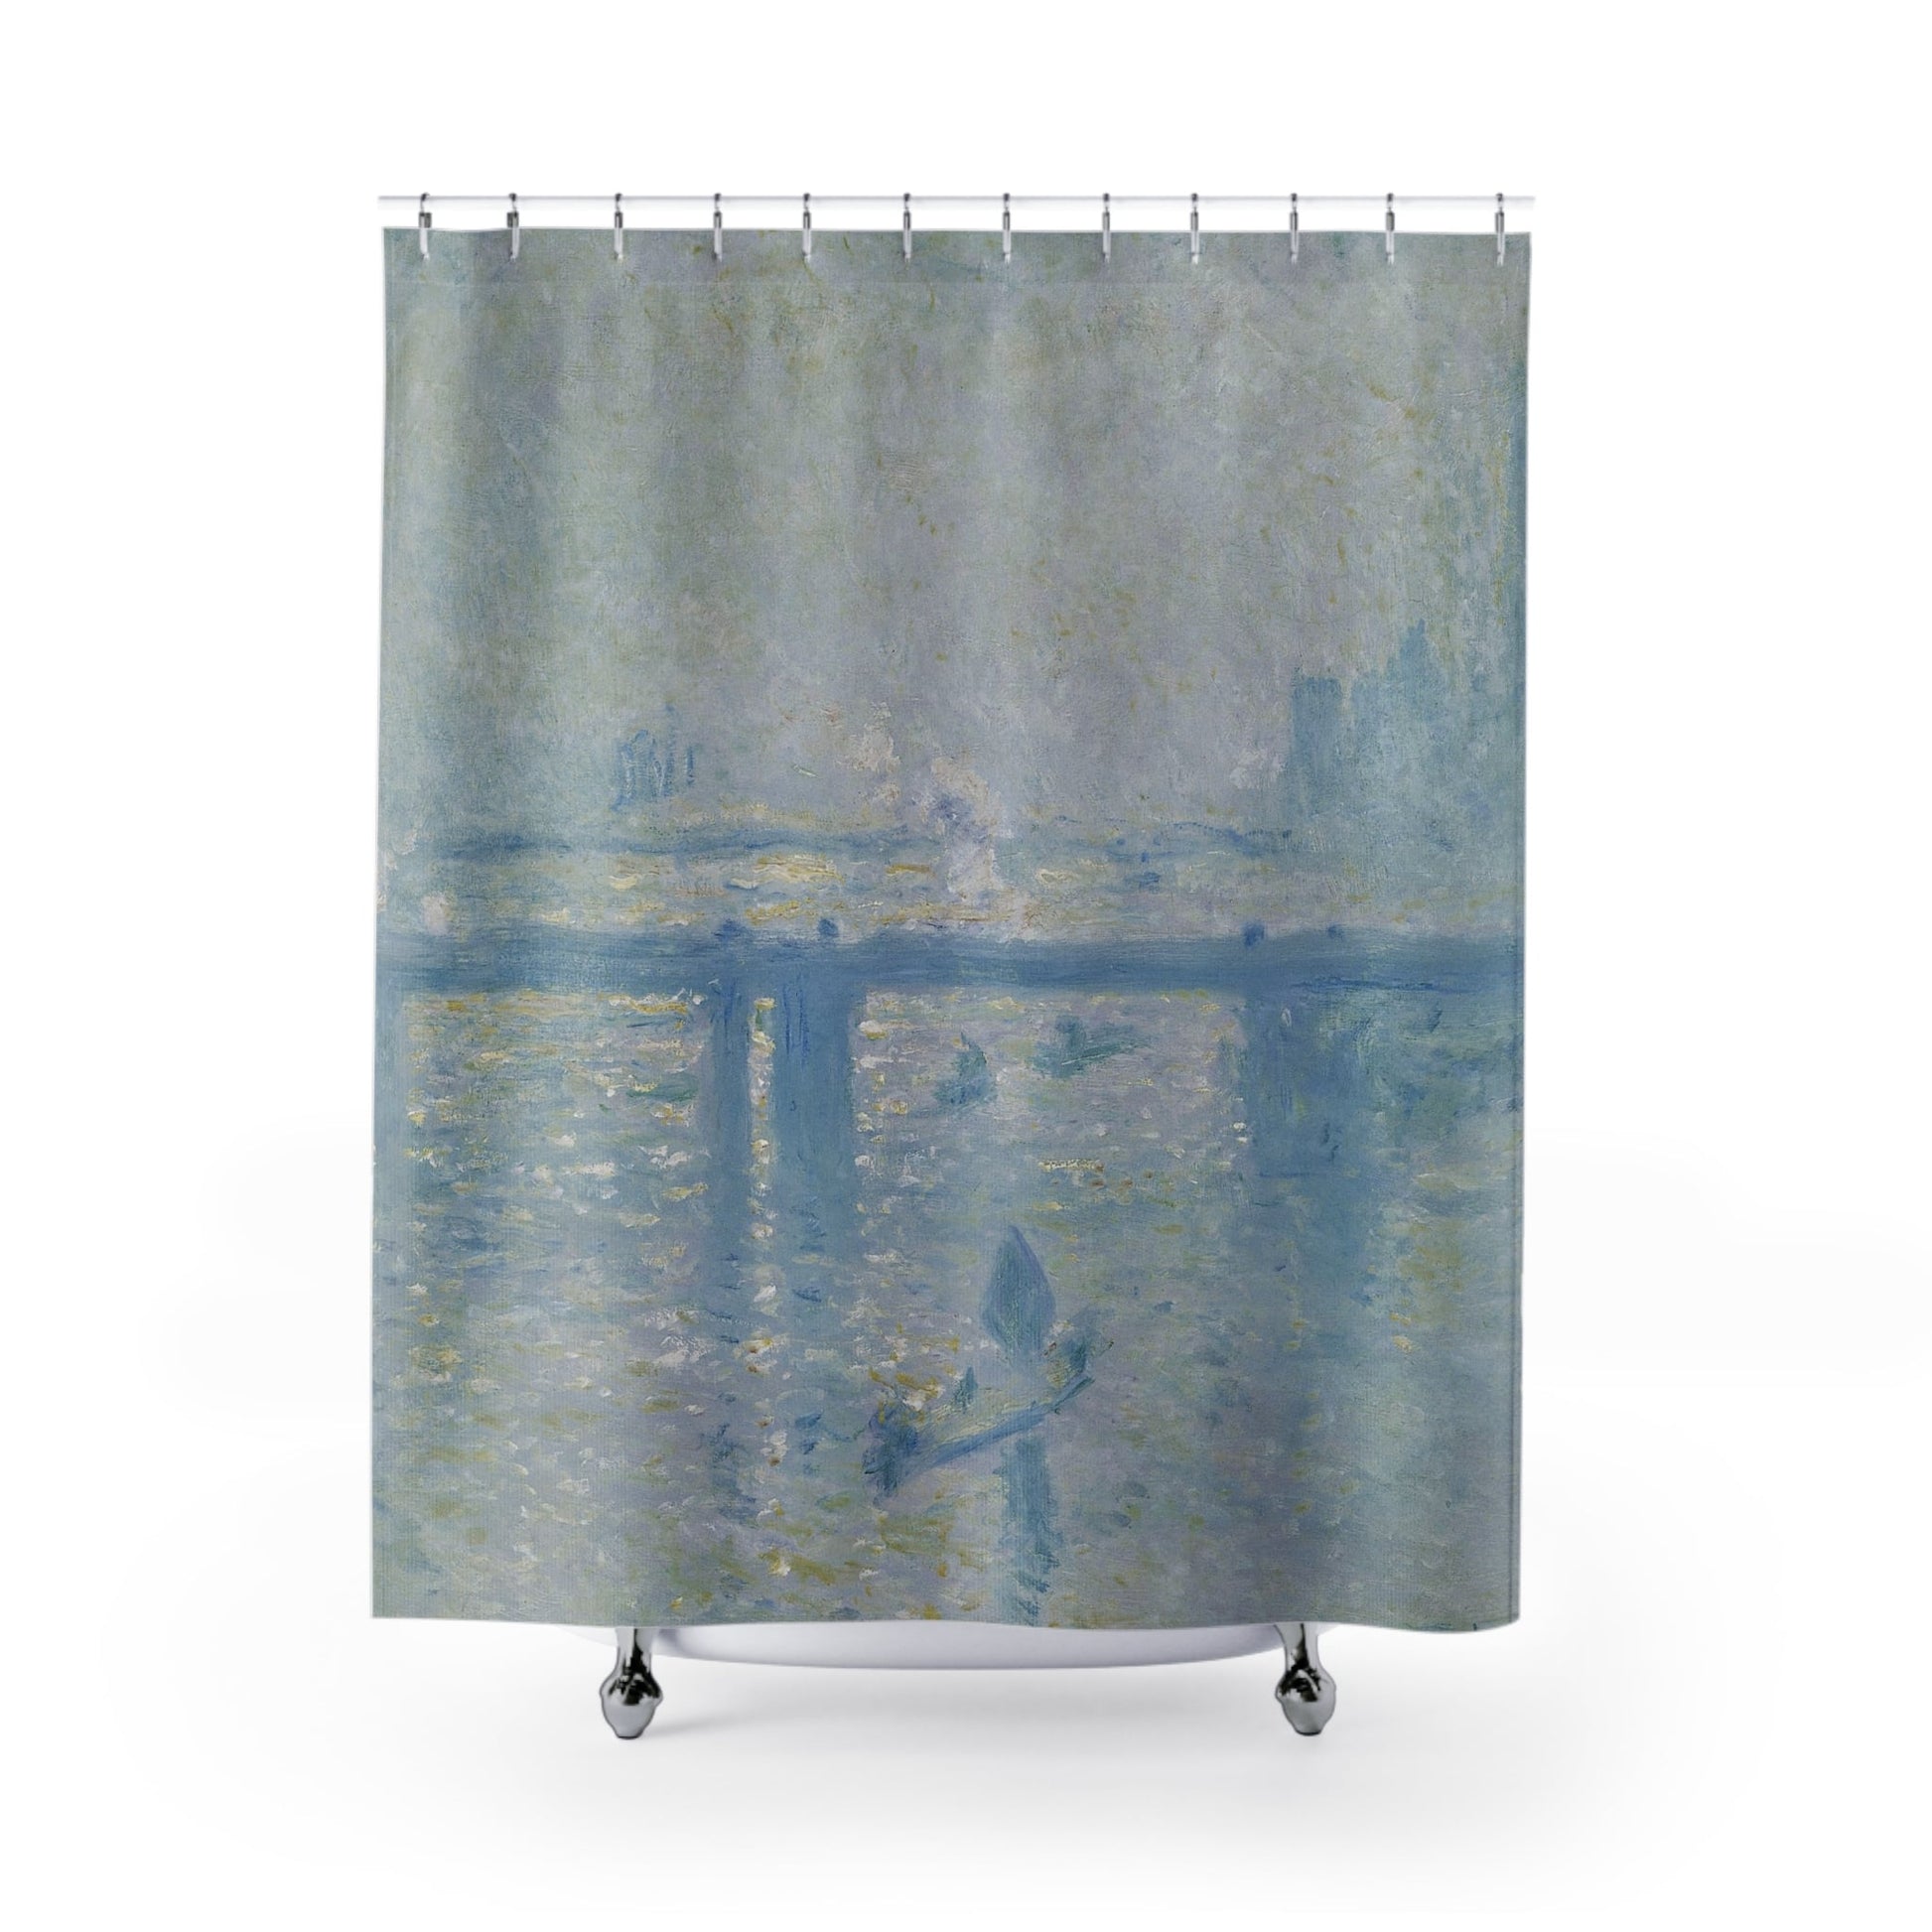 Dusty Light Blue Shower Curtain with tranquil design, serene bathroom decor featuring calming light blue tones.